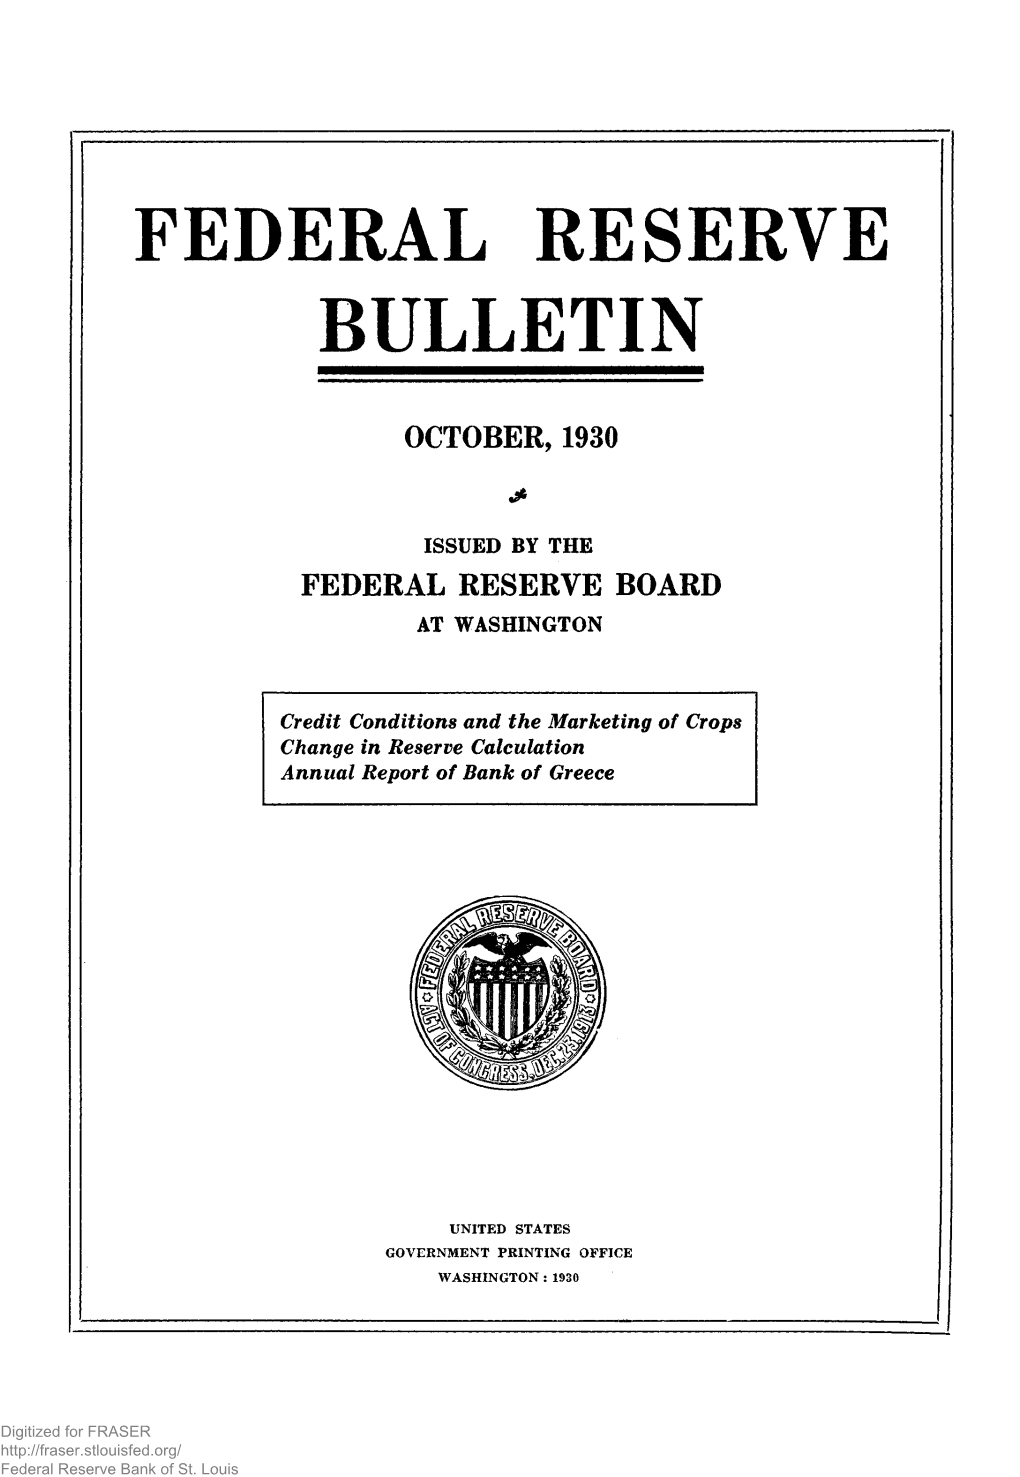 Federal Reserve Bulletin October 1930